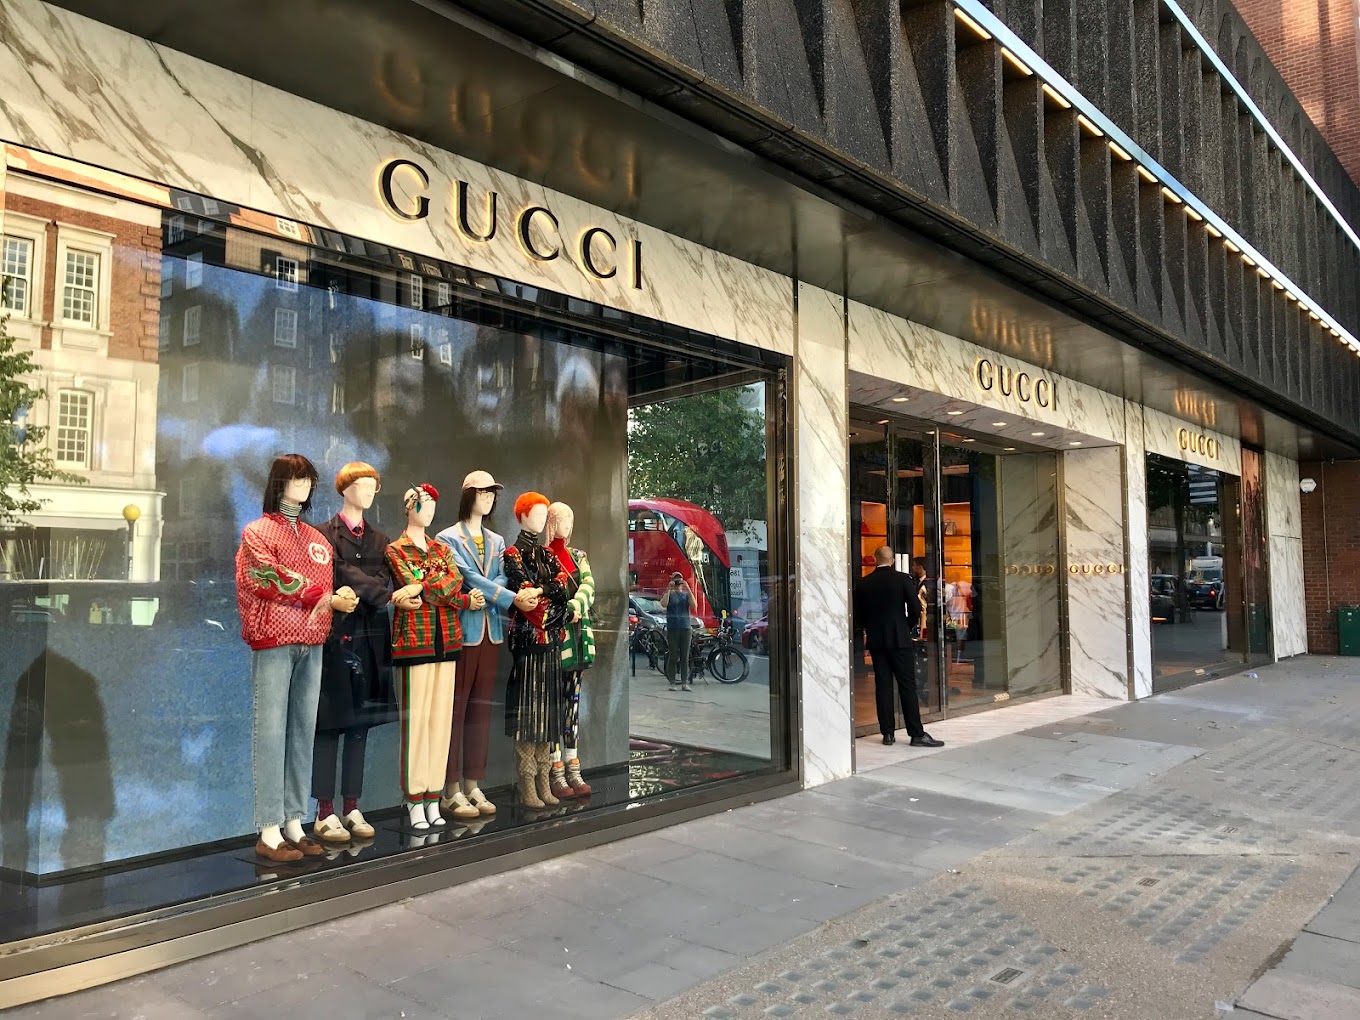 Gucci Shops In London: Where Luxury Meets Fashion - London Kensington Guide